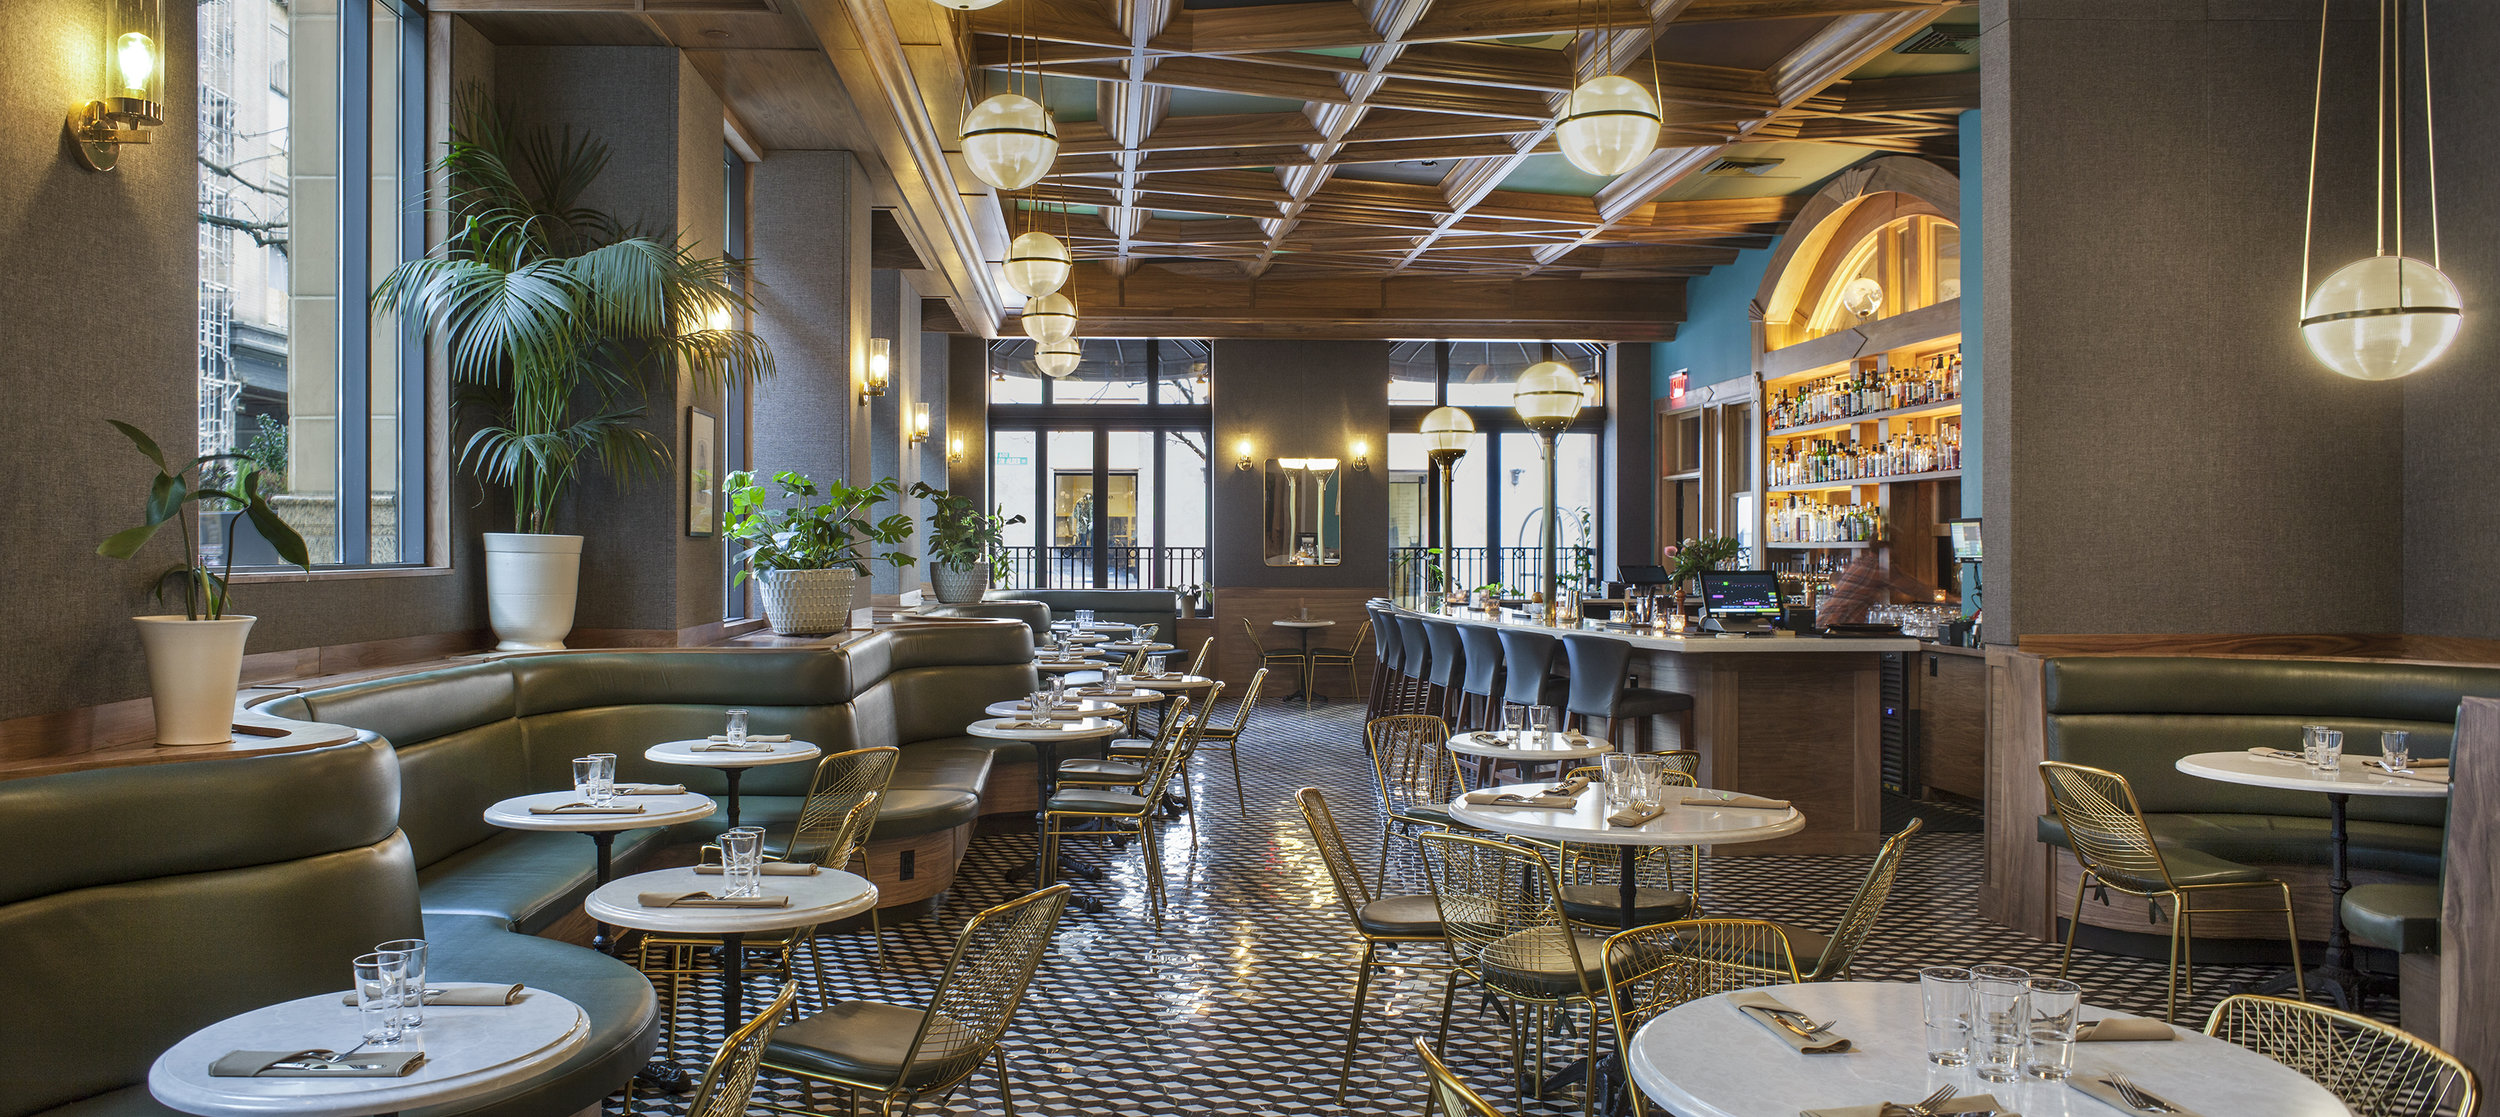  Omerta Restaurant + Opal Bar  Scott Edwards Architecture 